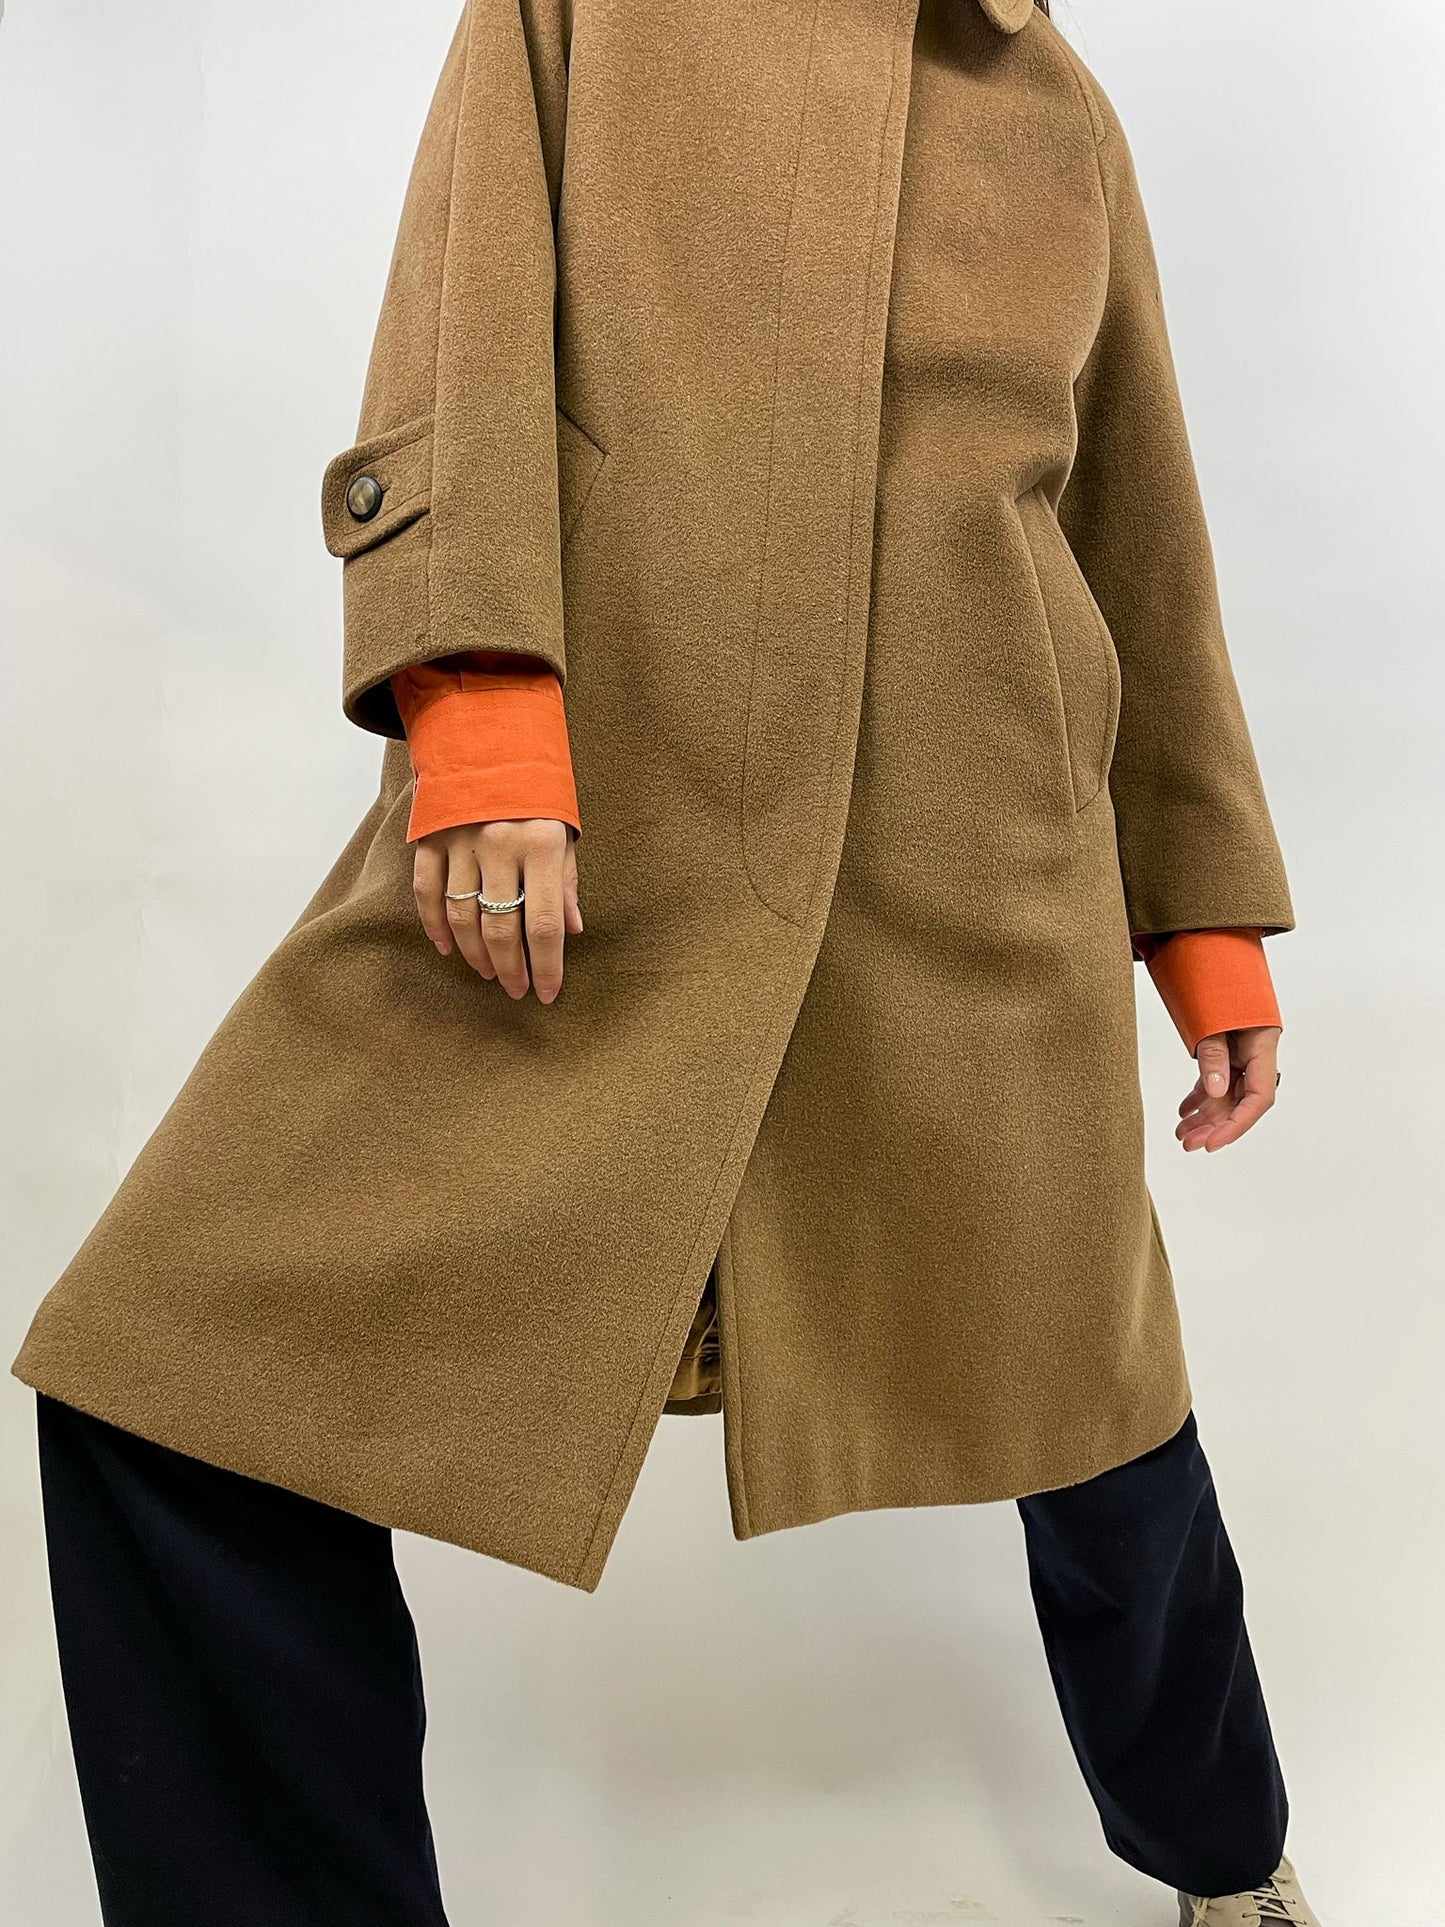 Delmod 1980s coat